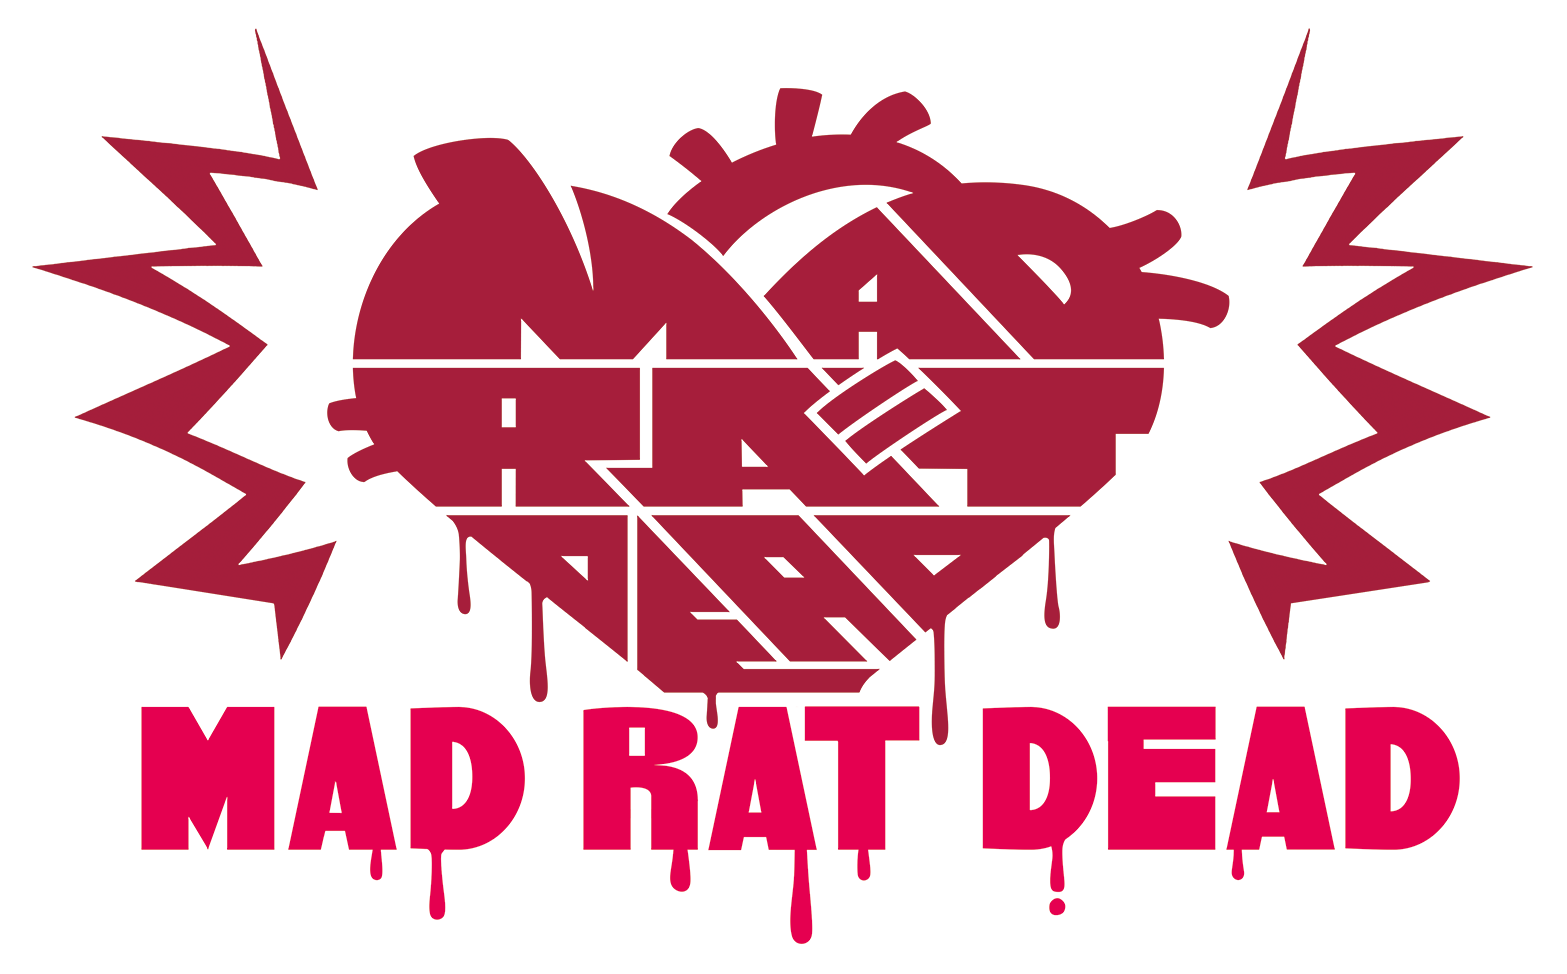 Little Human Girl, Mad Rat Dead Wiki